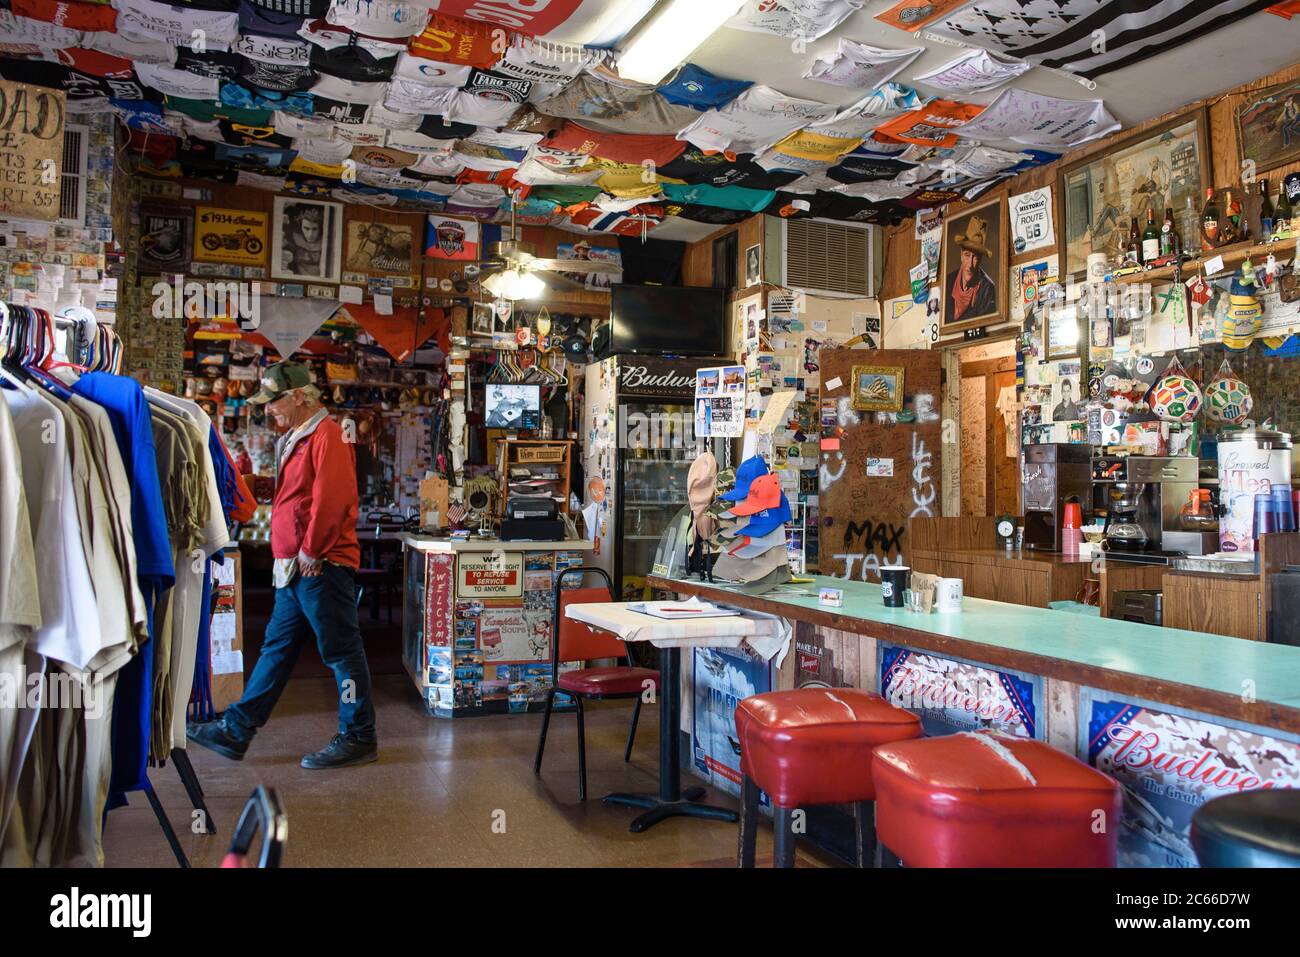 Inside Bagdad Cafe in California, USA Stock Photo